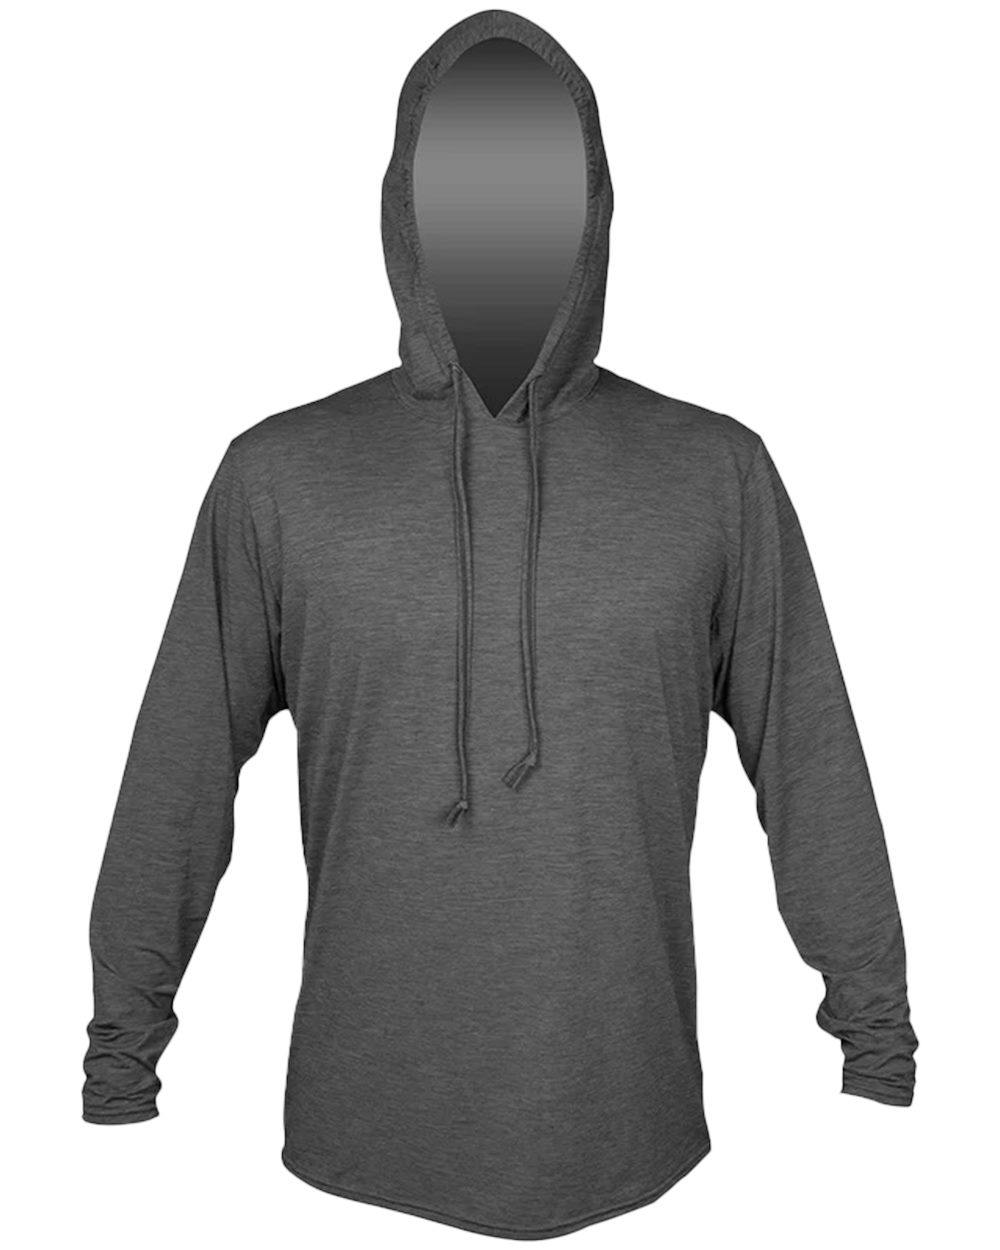 Image for Low Pro Tech Hooded T-Shirt - MVLPRH8